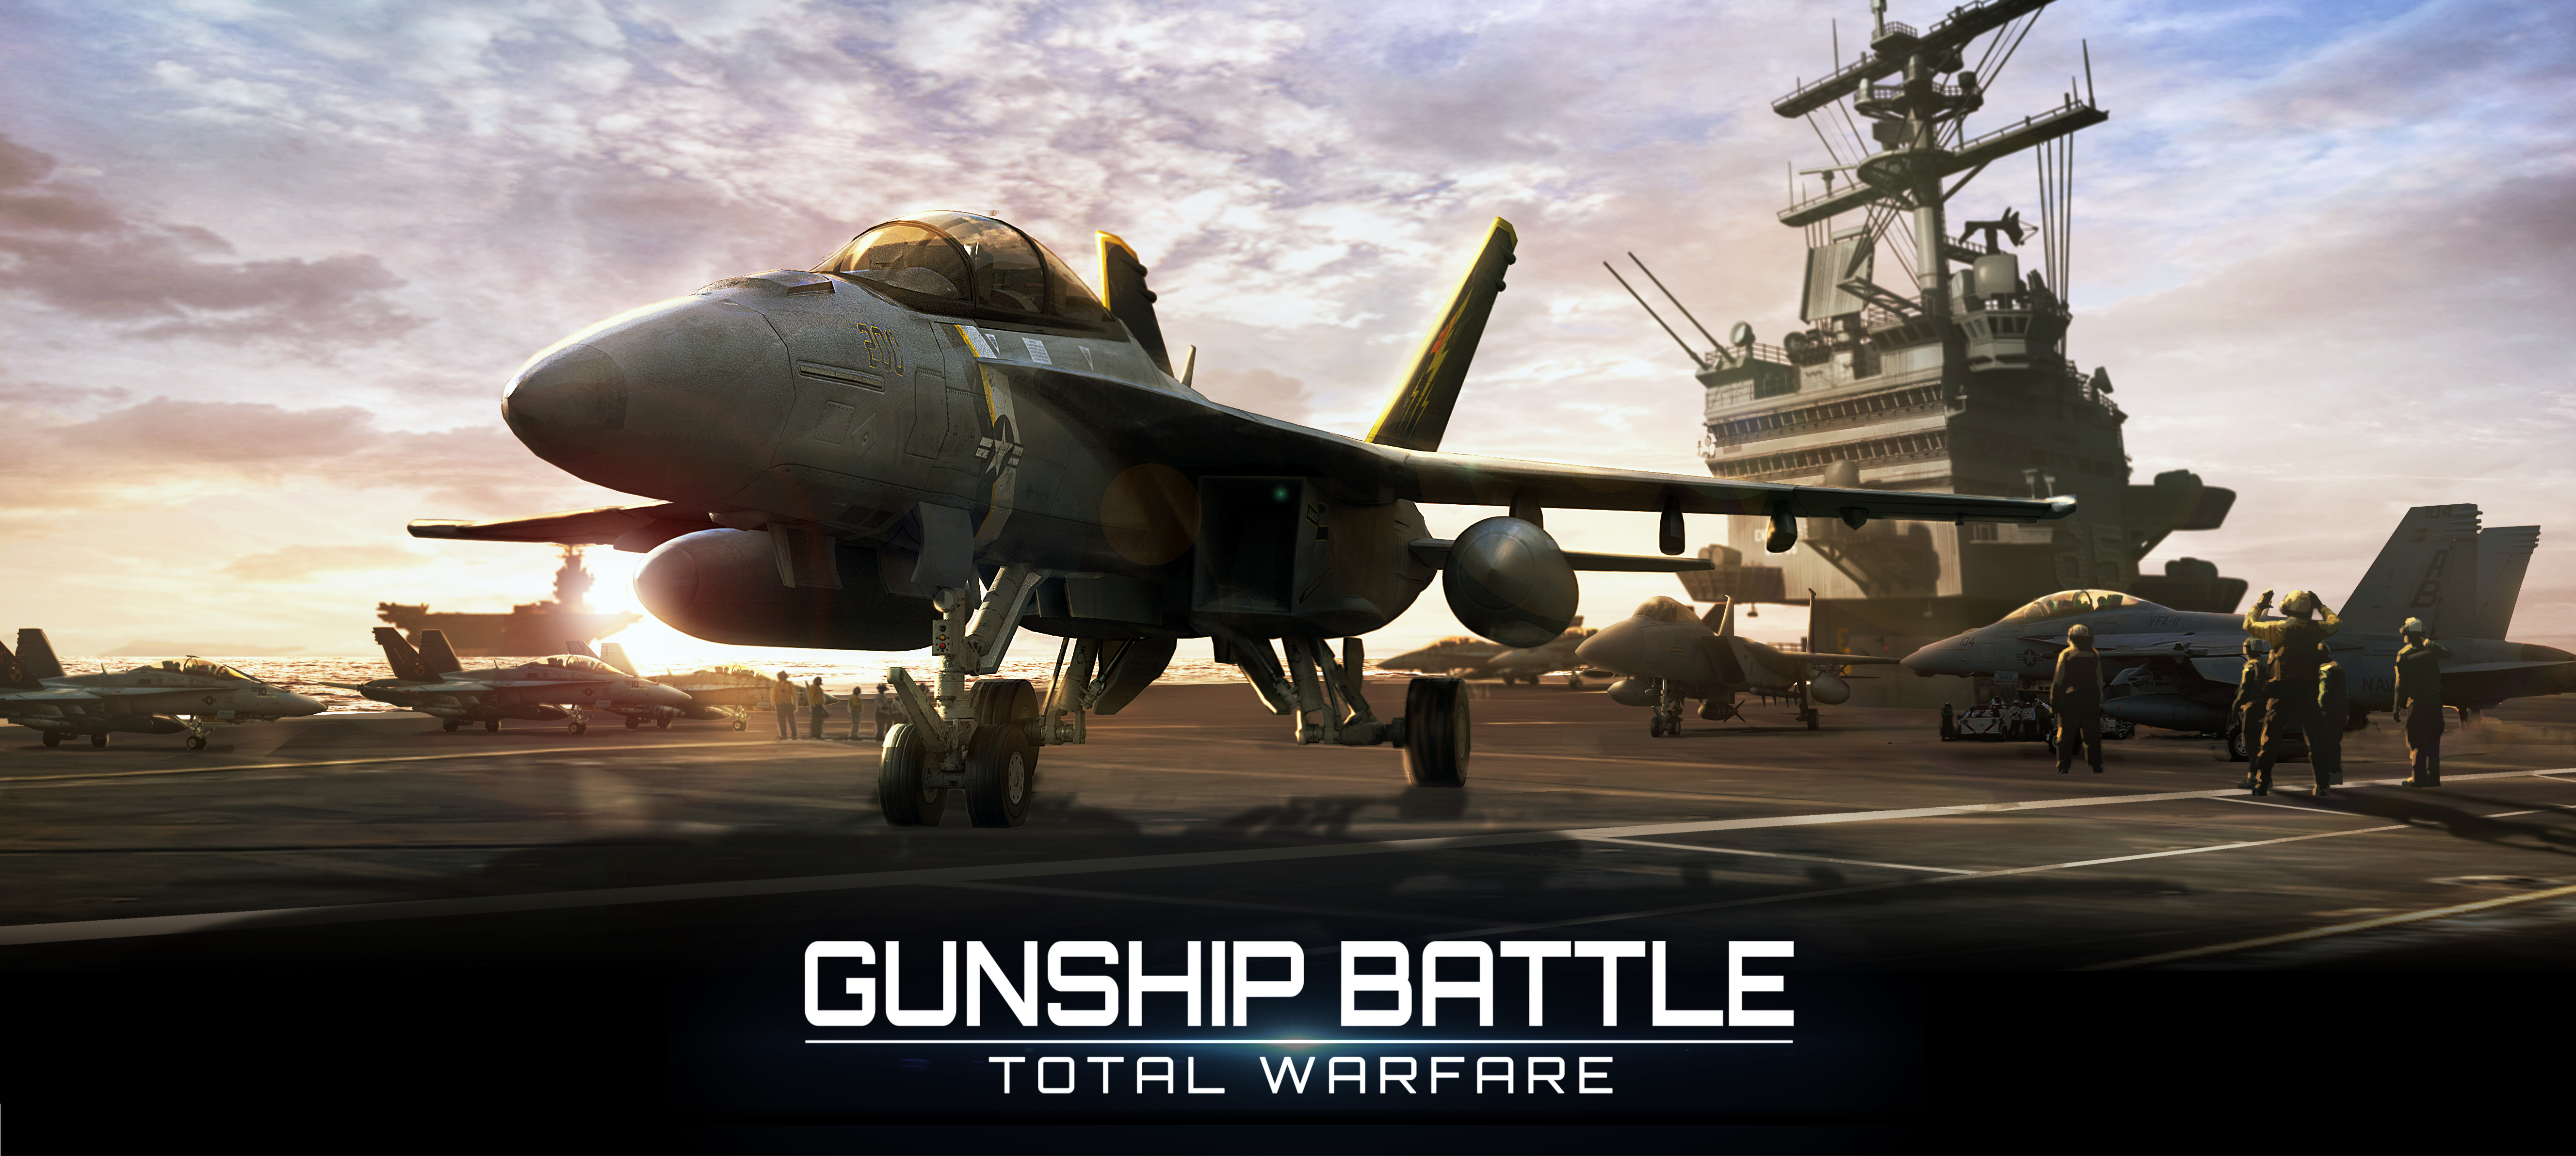 gunship battle total warfare download